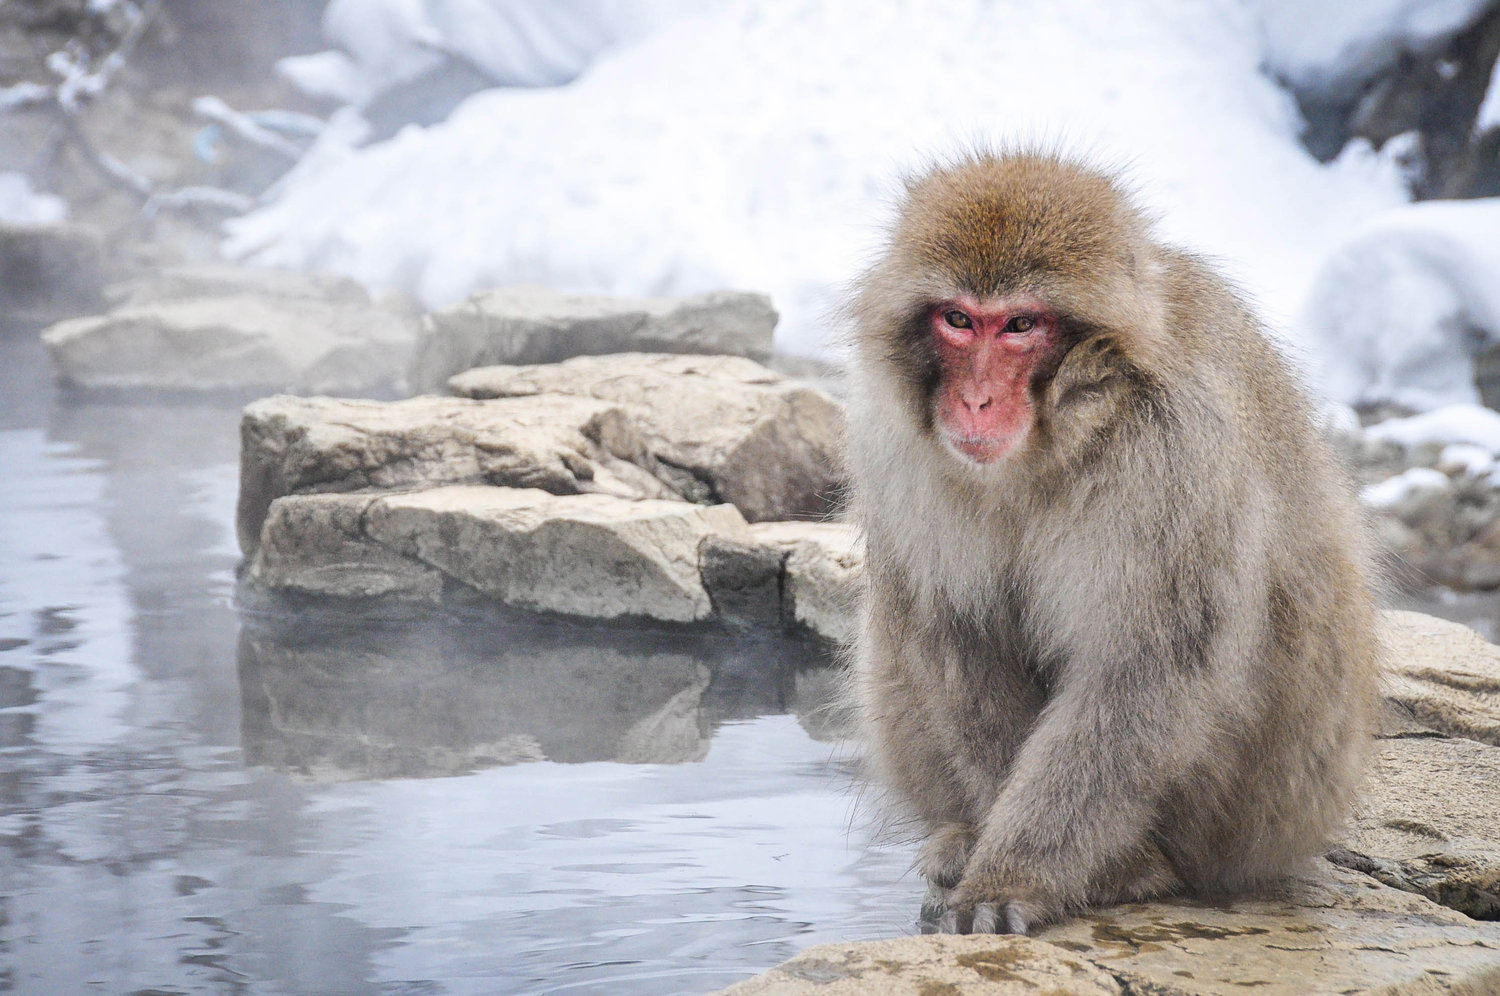 Snow Monkey Nagano Japan First timer guide